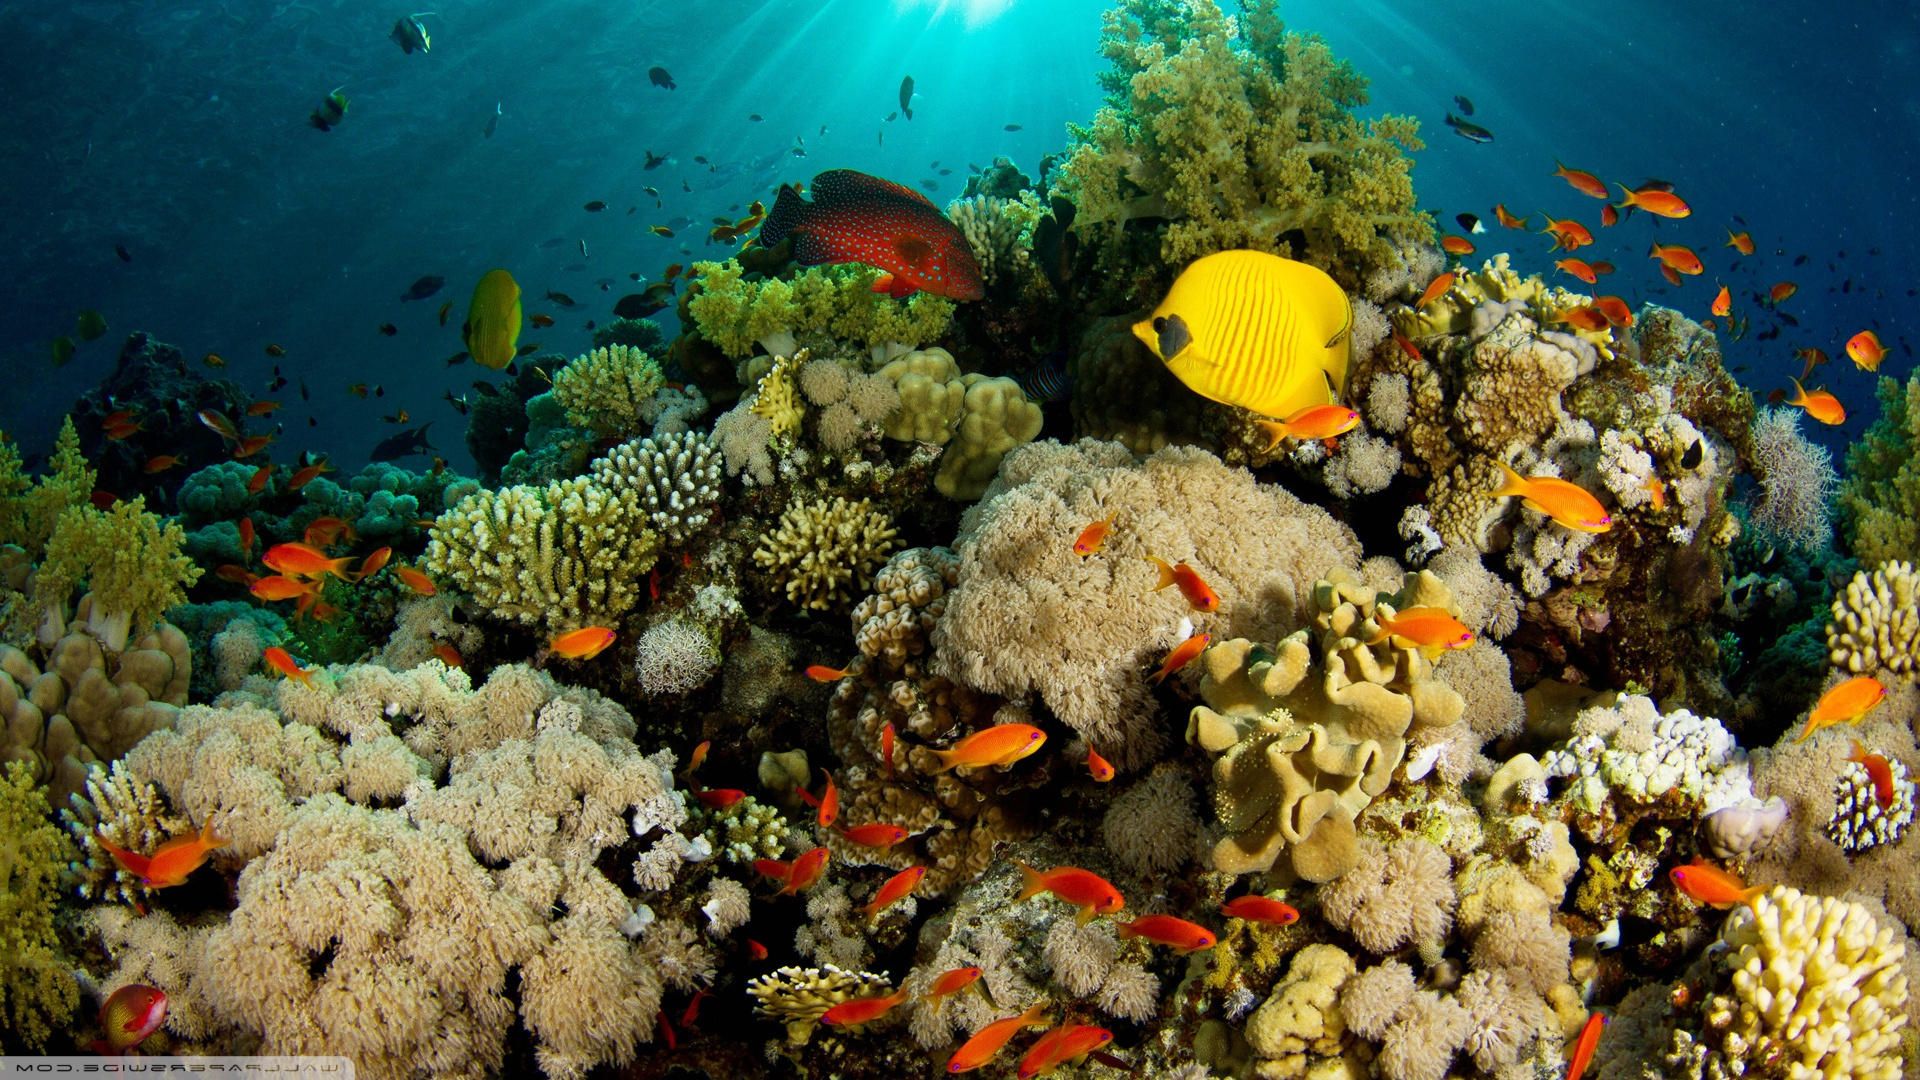 Coral Reef download high quality desktop wallpaper